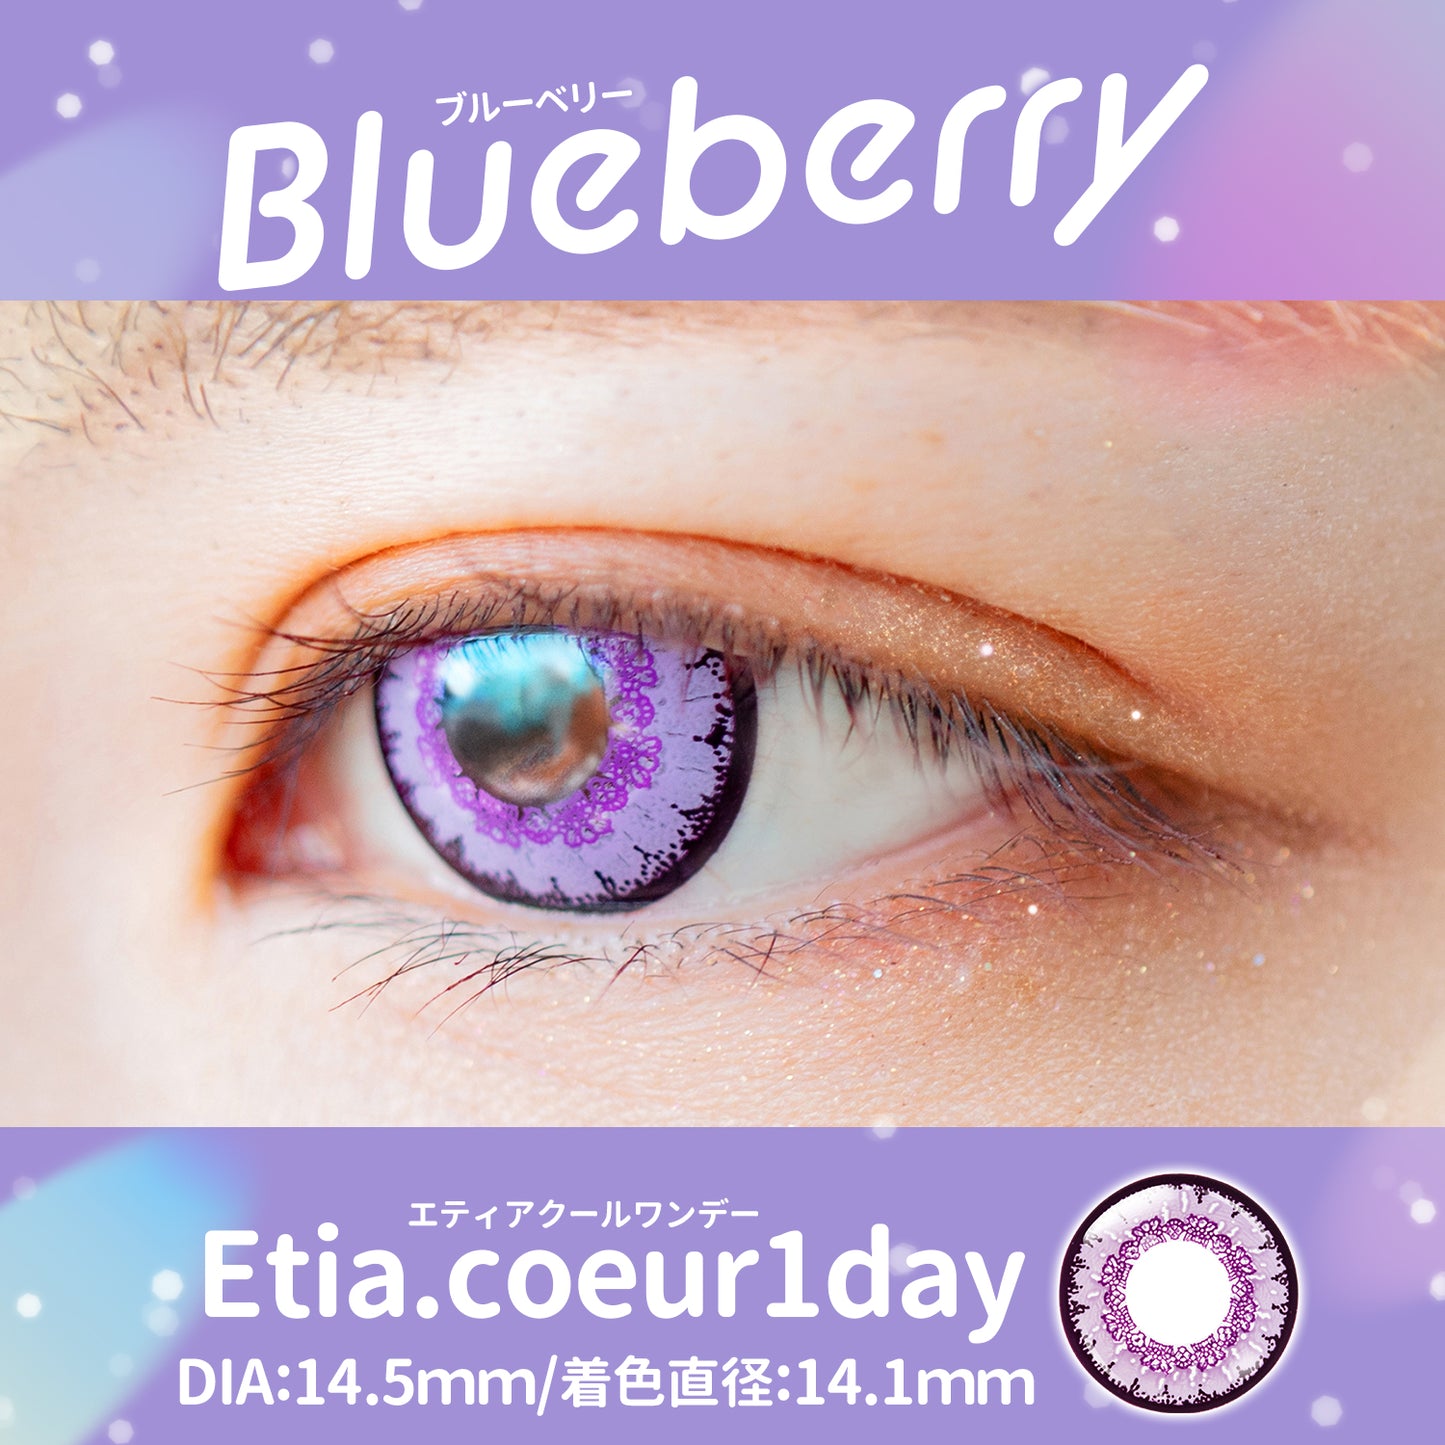 PUDDING Etia Coeur Blueberry | 1 Day, 6 Pcs